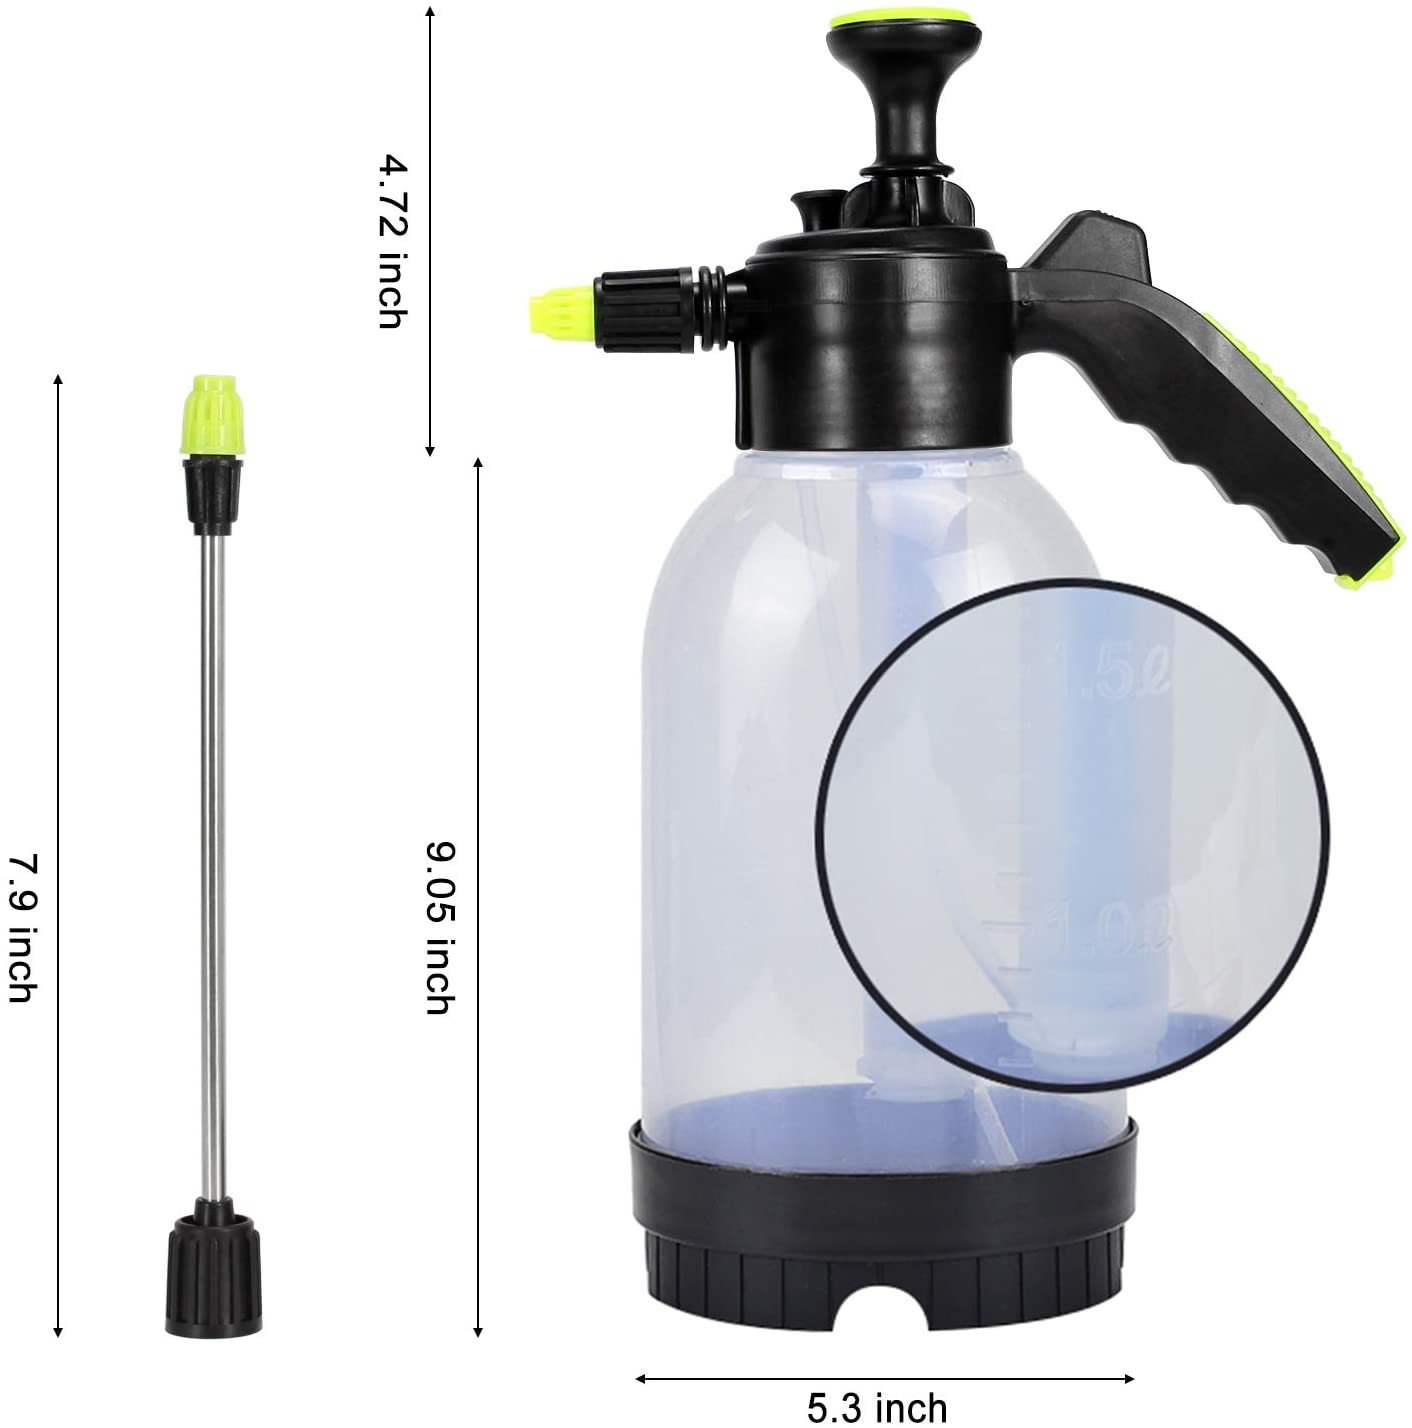 Hand Pressure Sprayer, Spray Bottle with Adjustable Pressure Nozzle for Plants & Gardens